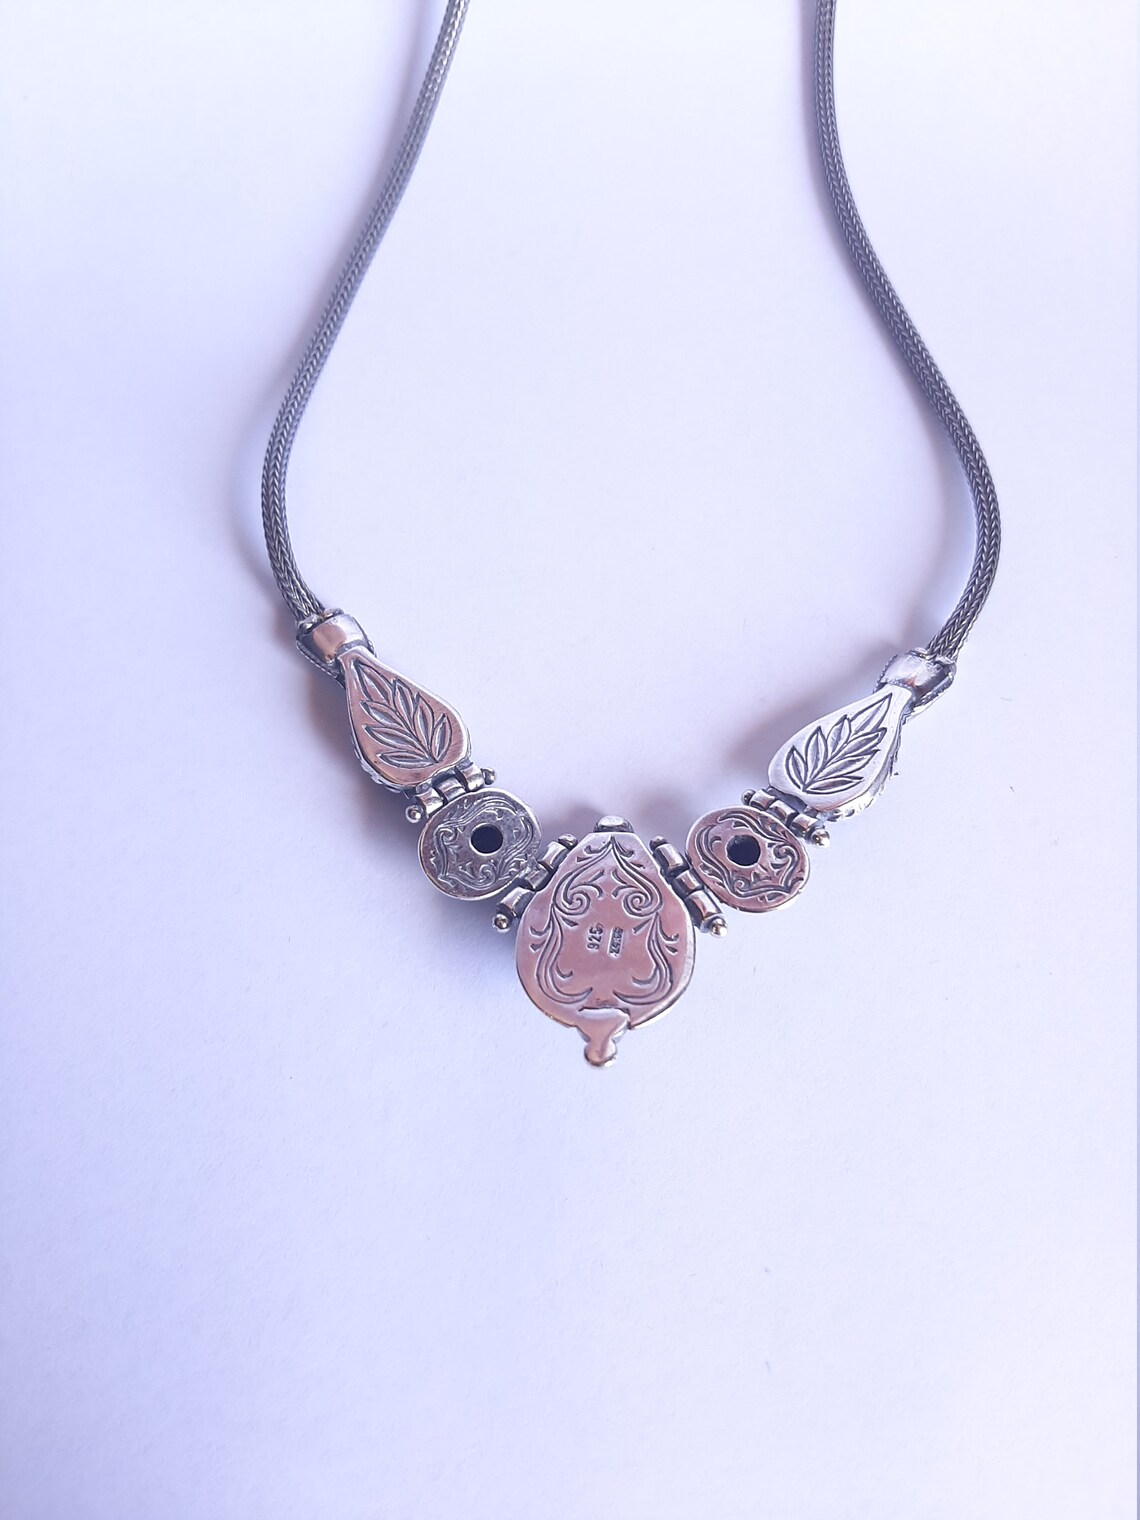 Greek necklace Black onyx gemstone Sterling silver 925 | Etsy